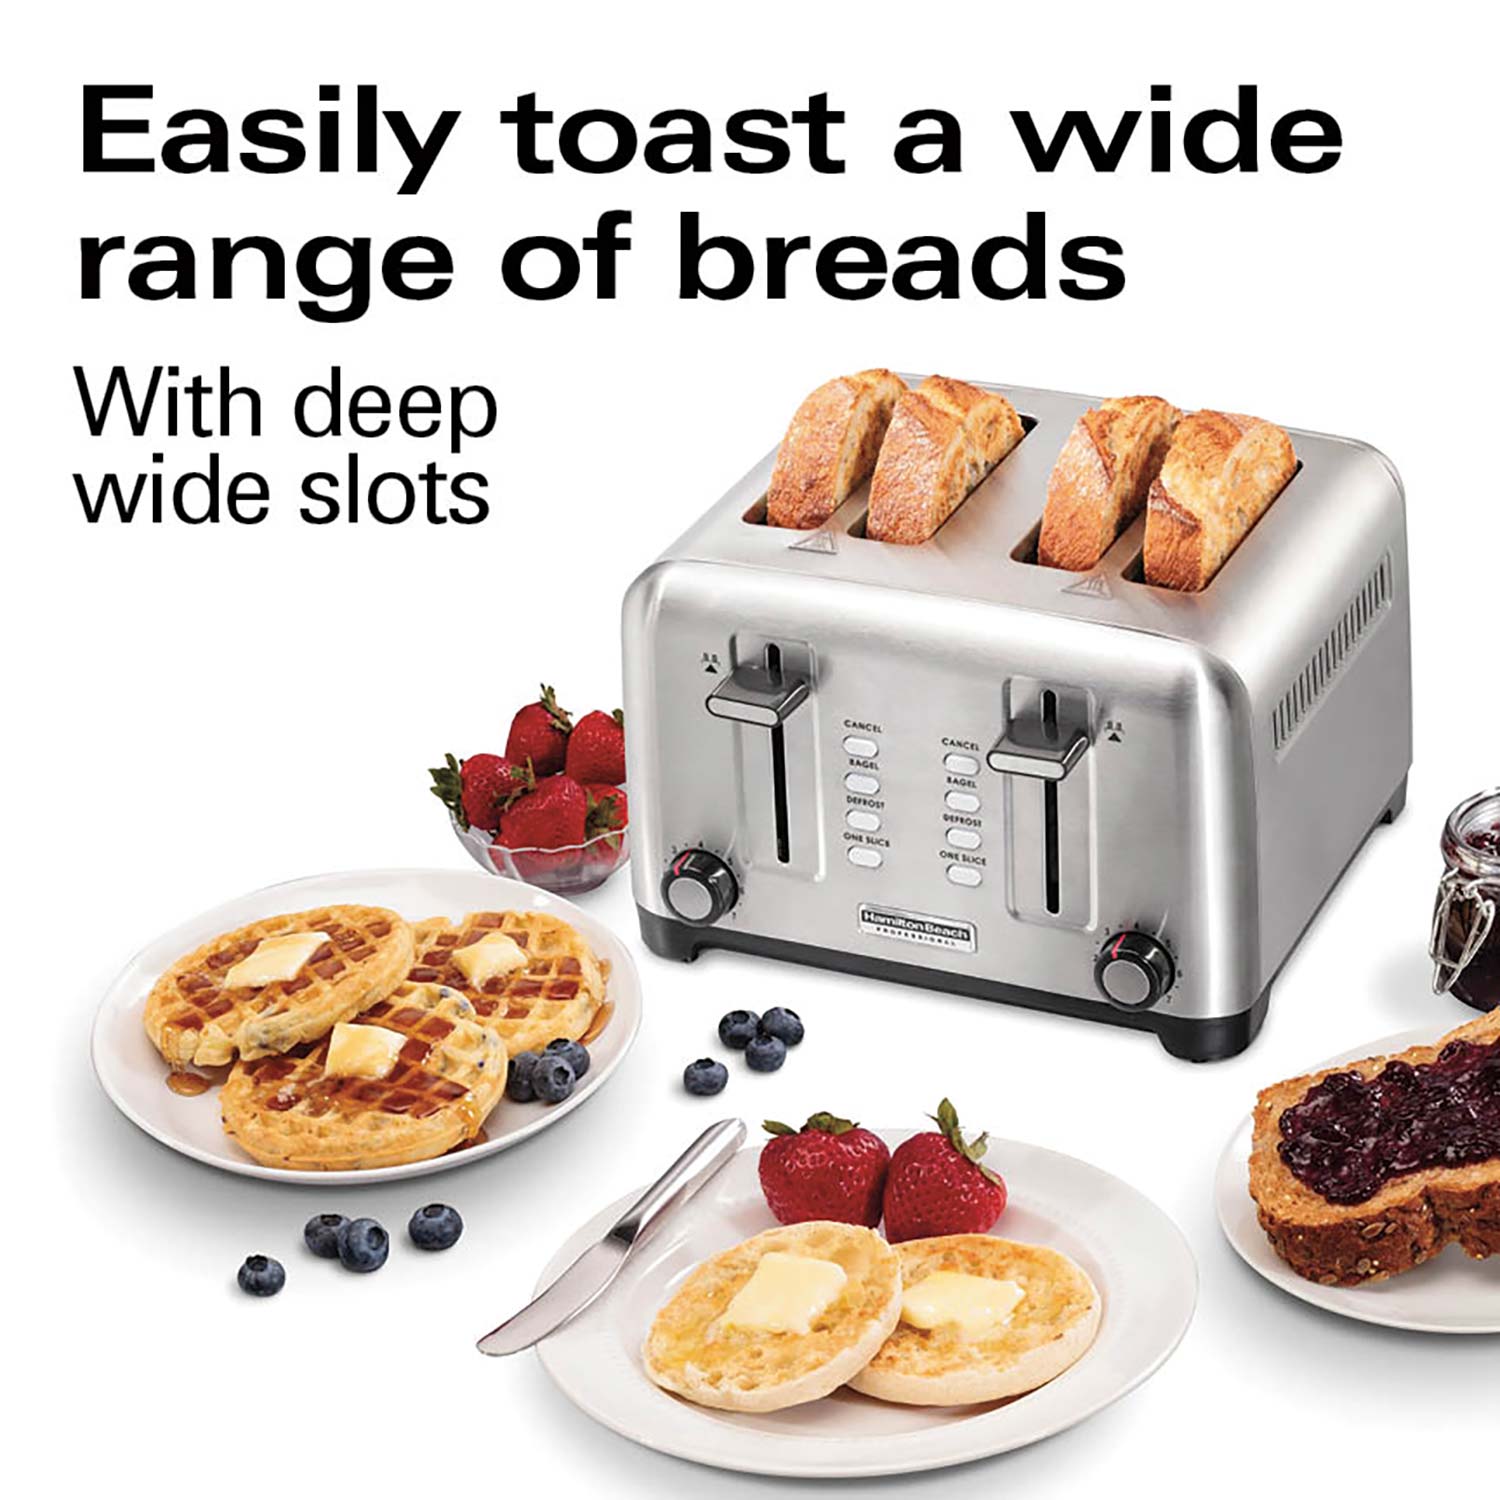 Hamilton Beach 4 Slice Long-Slot Toaster, Sure-Toast One-Slice Technology,  Slim Design, 24820 